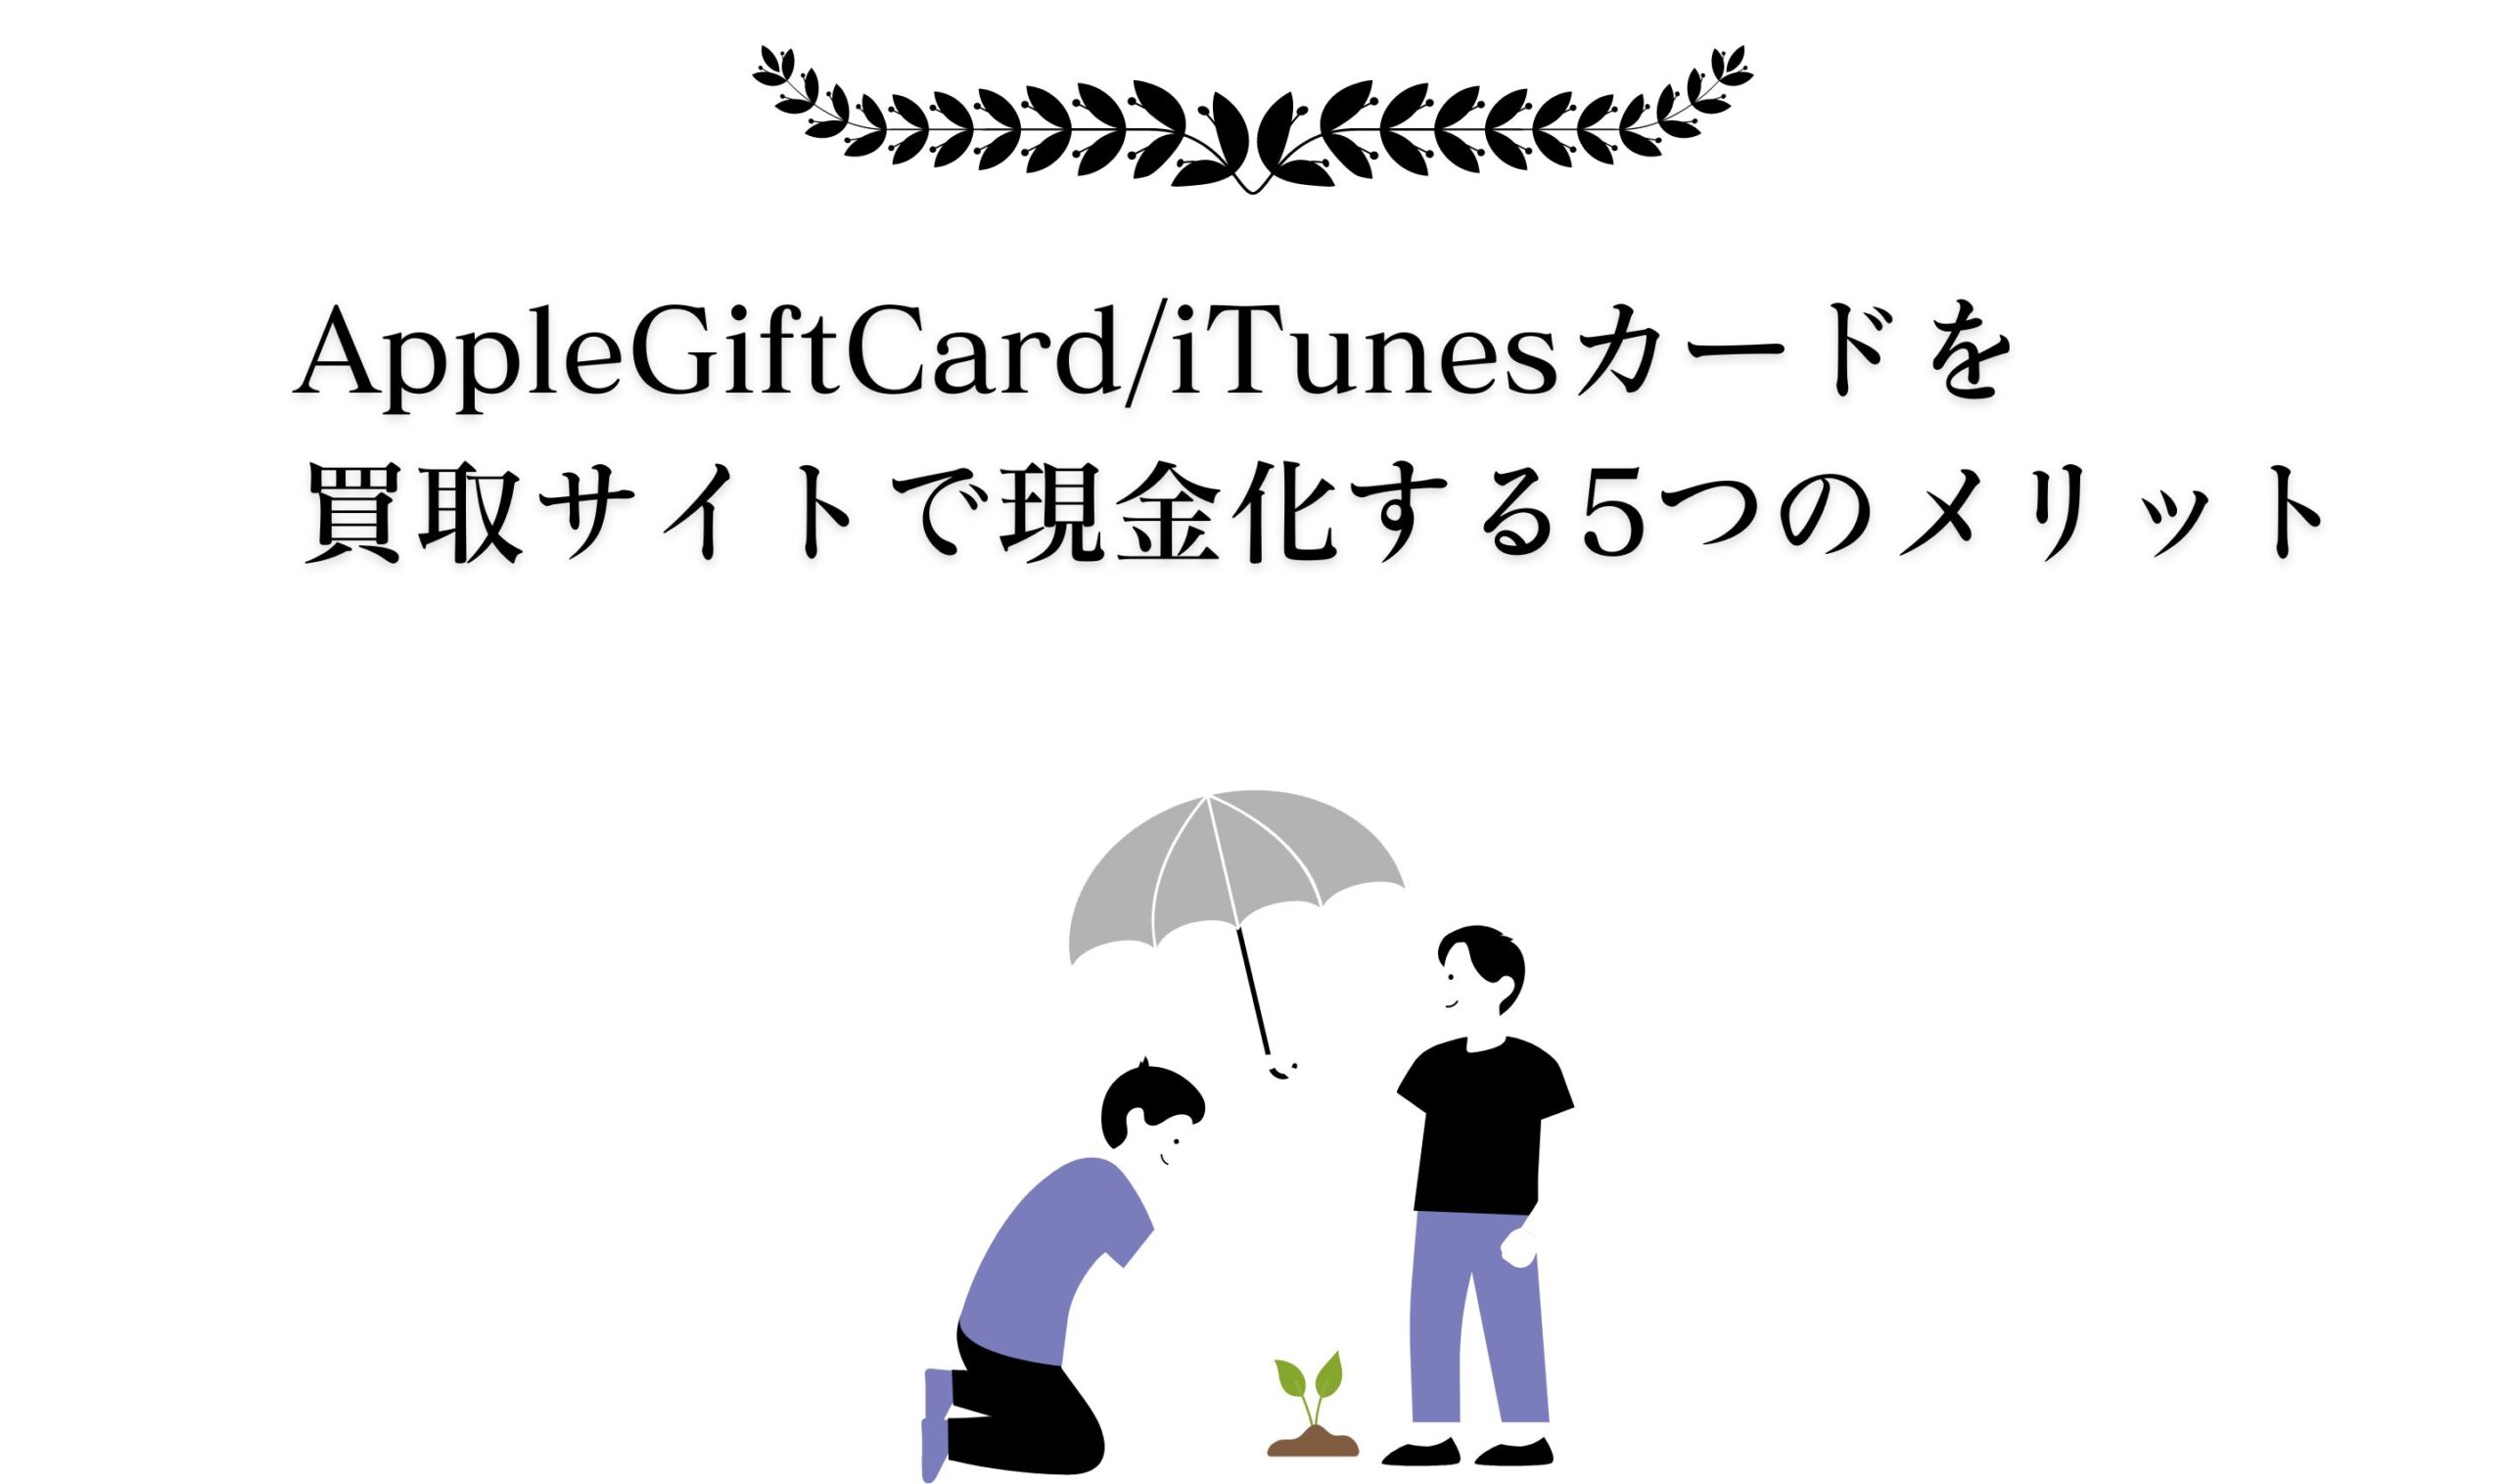 AppleGiftCard/iTunesカードを買取サイトで現金化する3つのメリット